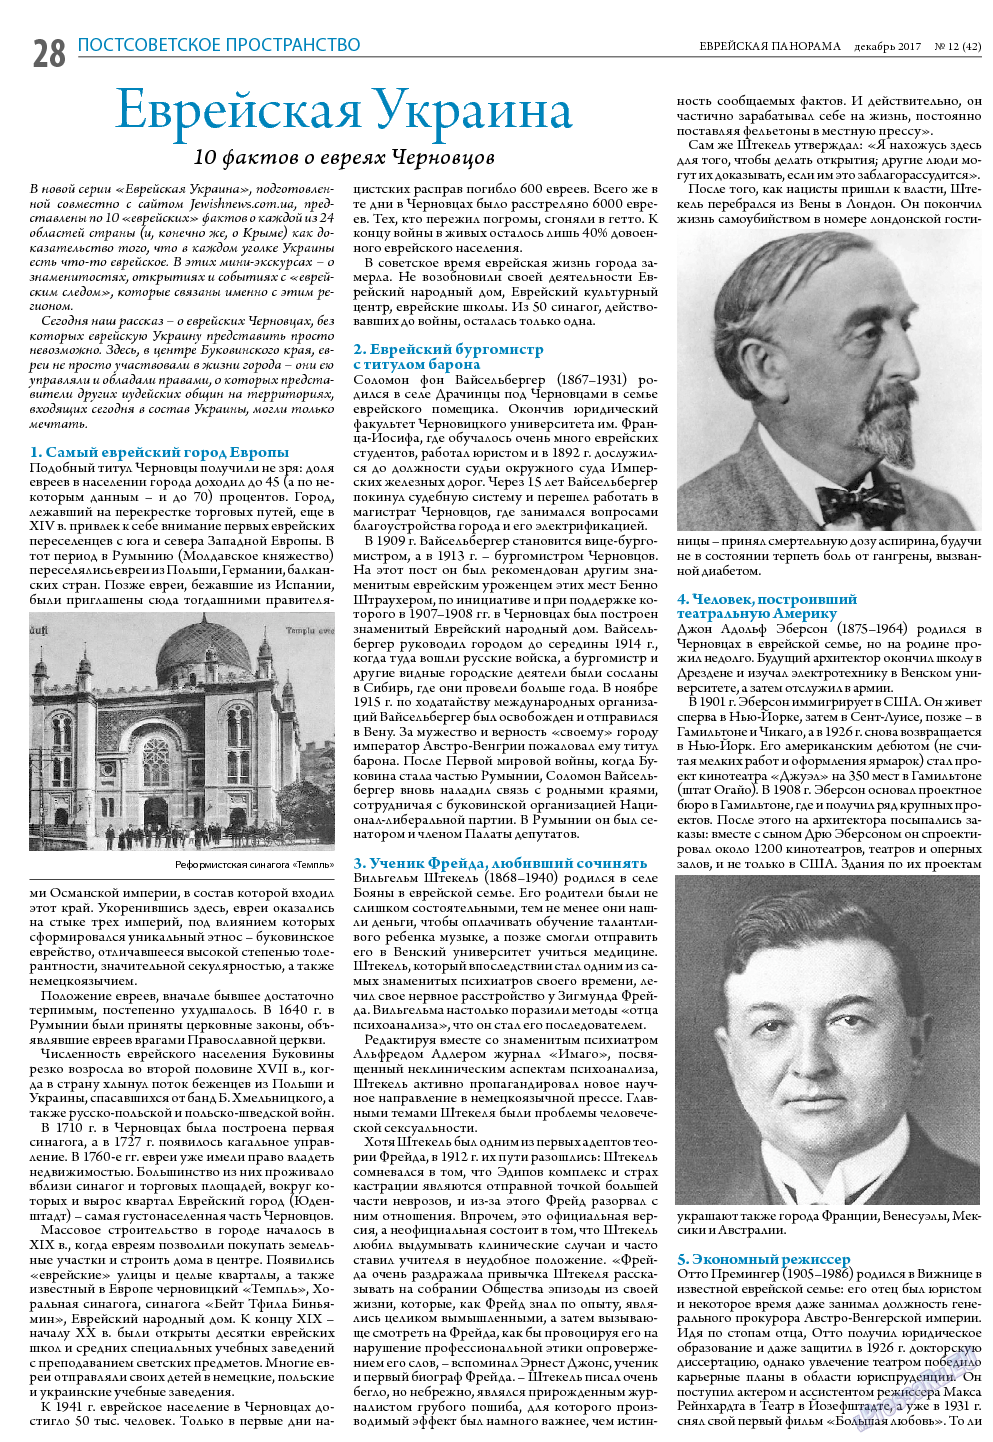 Еврейская панорама, газета. 2017 №12 стр.28